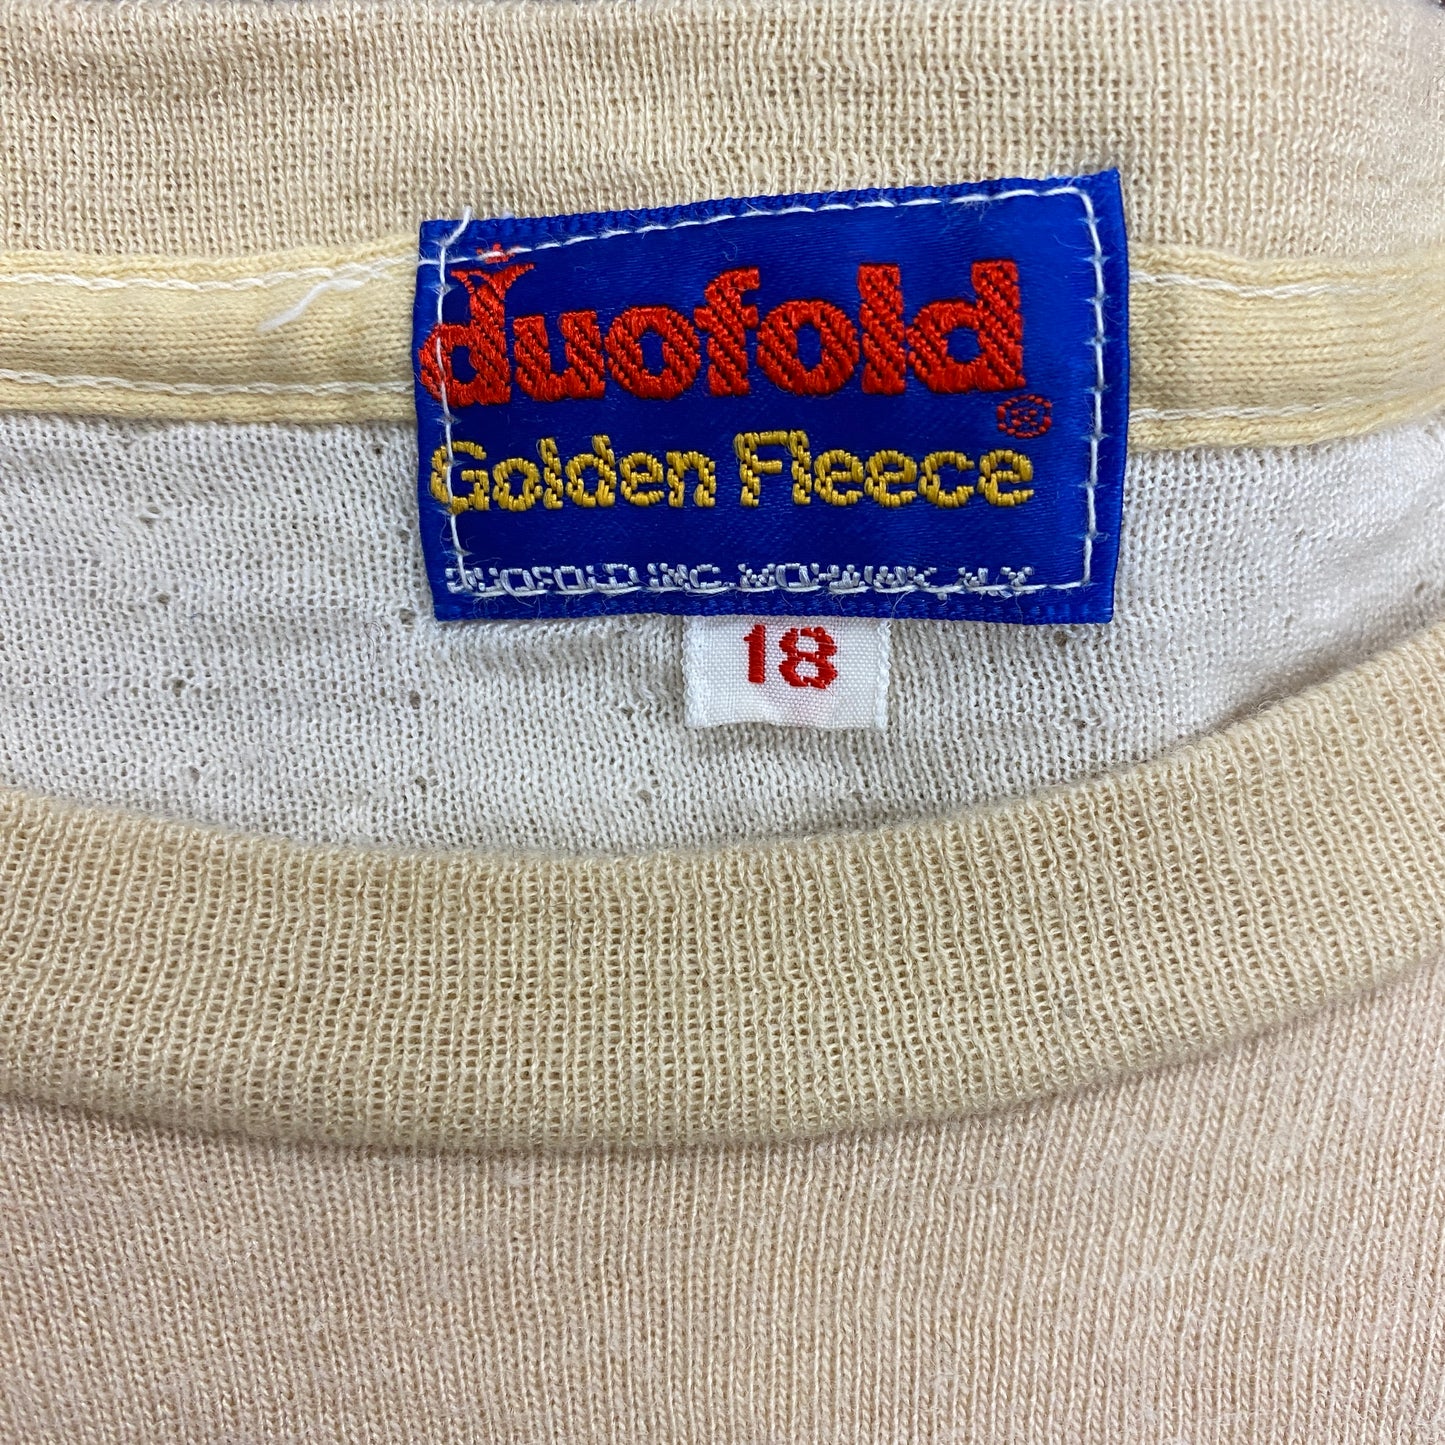 Vintage 70s Duofold (Mohawk NY) "Golden Fleece" Thermal Shirt - Size Medium